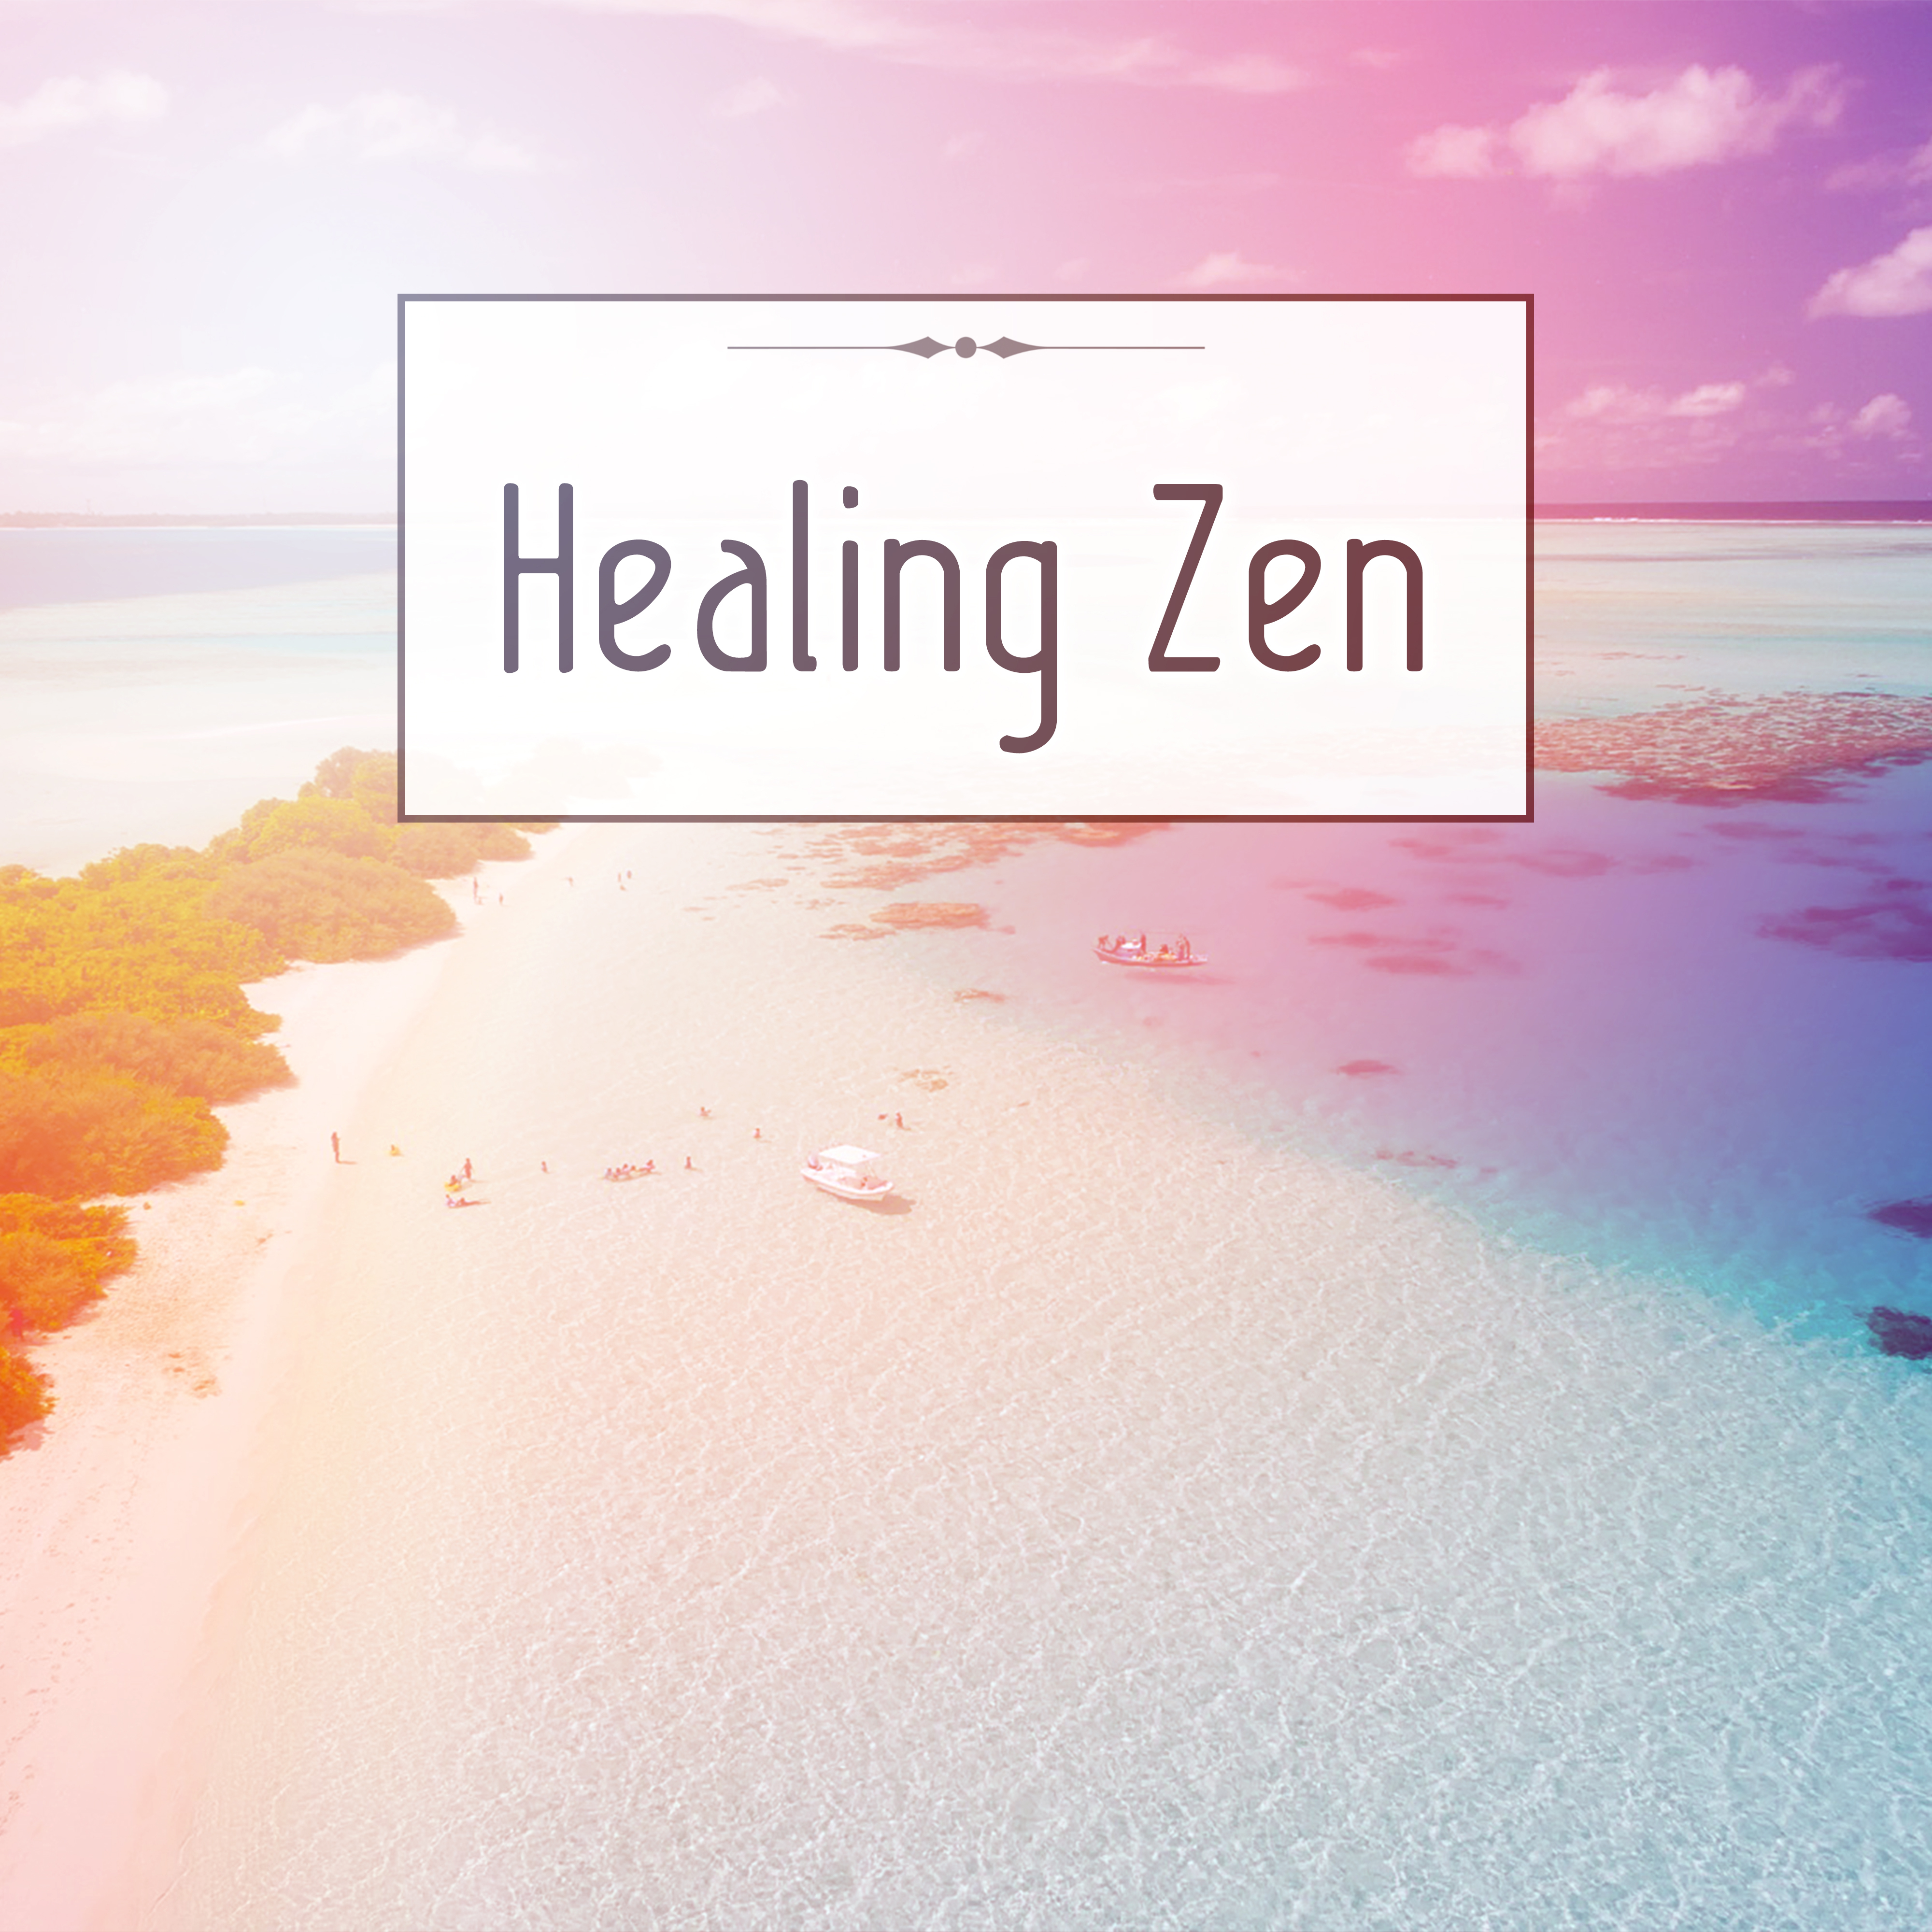 Healing Zen  Nature Sounds, Music for Relax After Work, Healing Relaxing Music, New Age, Instrumental Music